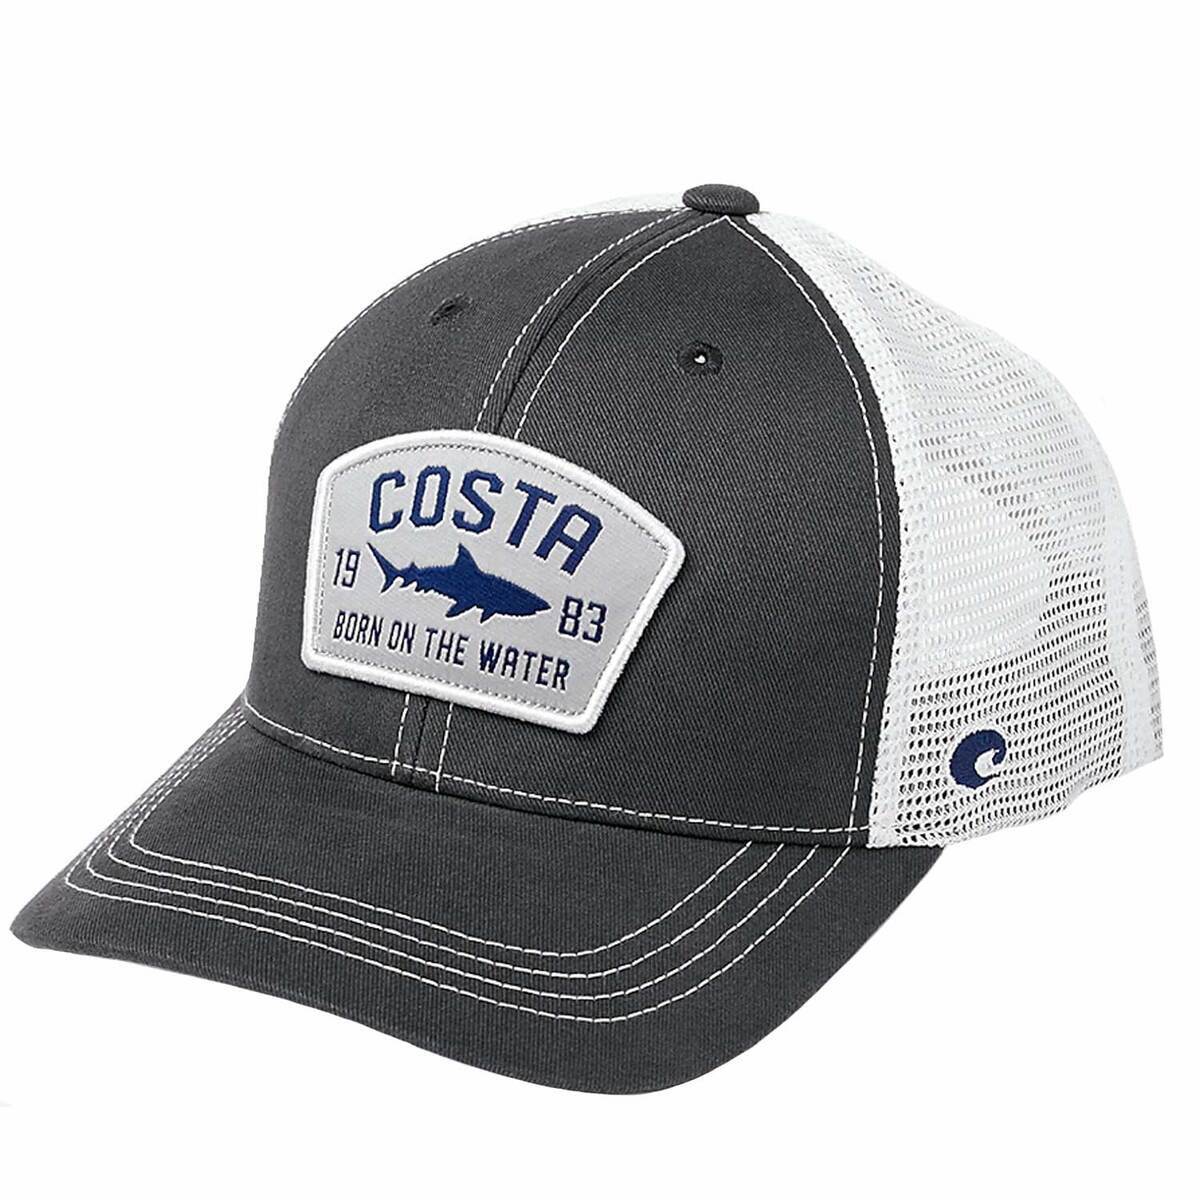 Costa Men's Chatham Trucker Adjustable Hat - Navy - One Size Fits